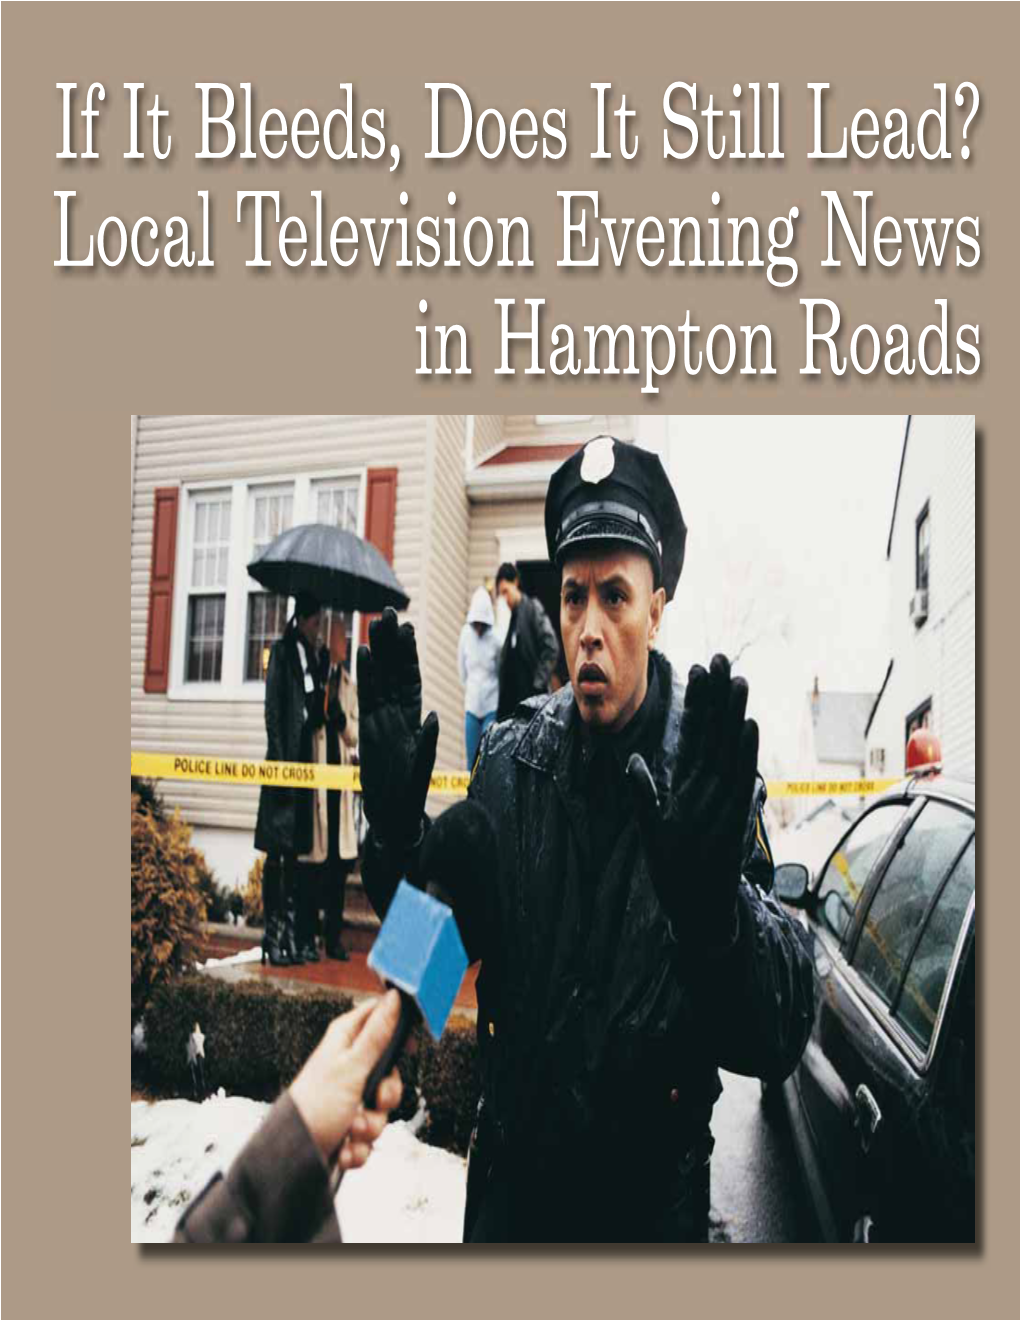 If It Bleeds, Does It Still Lead? Local Television Evening News in Hampton Roads IF IT BLEEDS, DOES IT STILL LEAD? LOCAL TELEVISION EVENING NEWS in HAMPTON ROADS